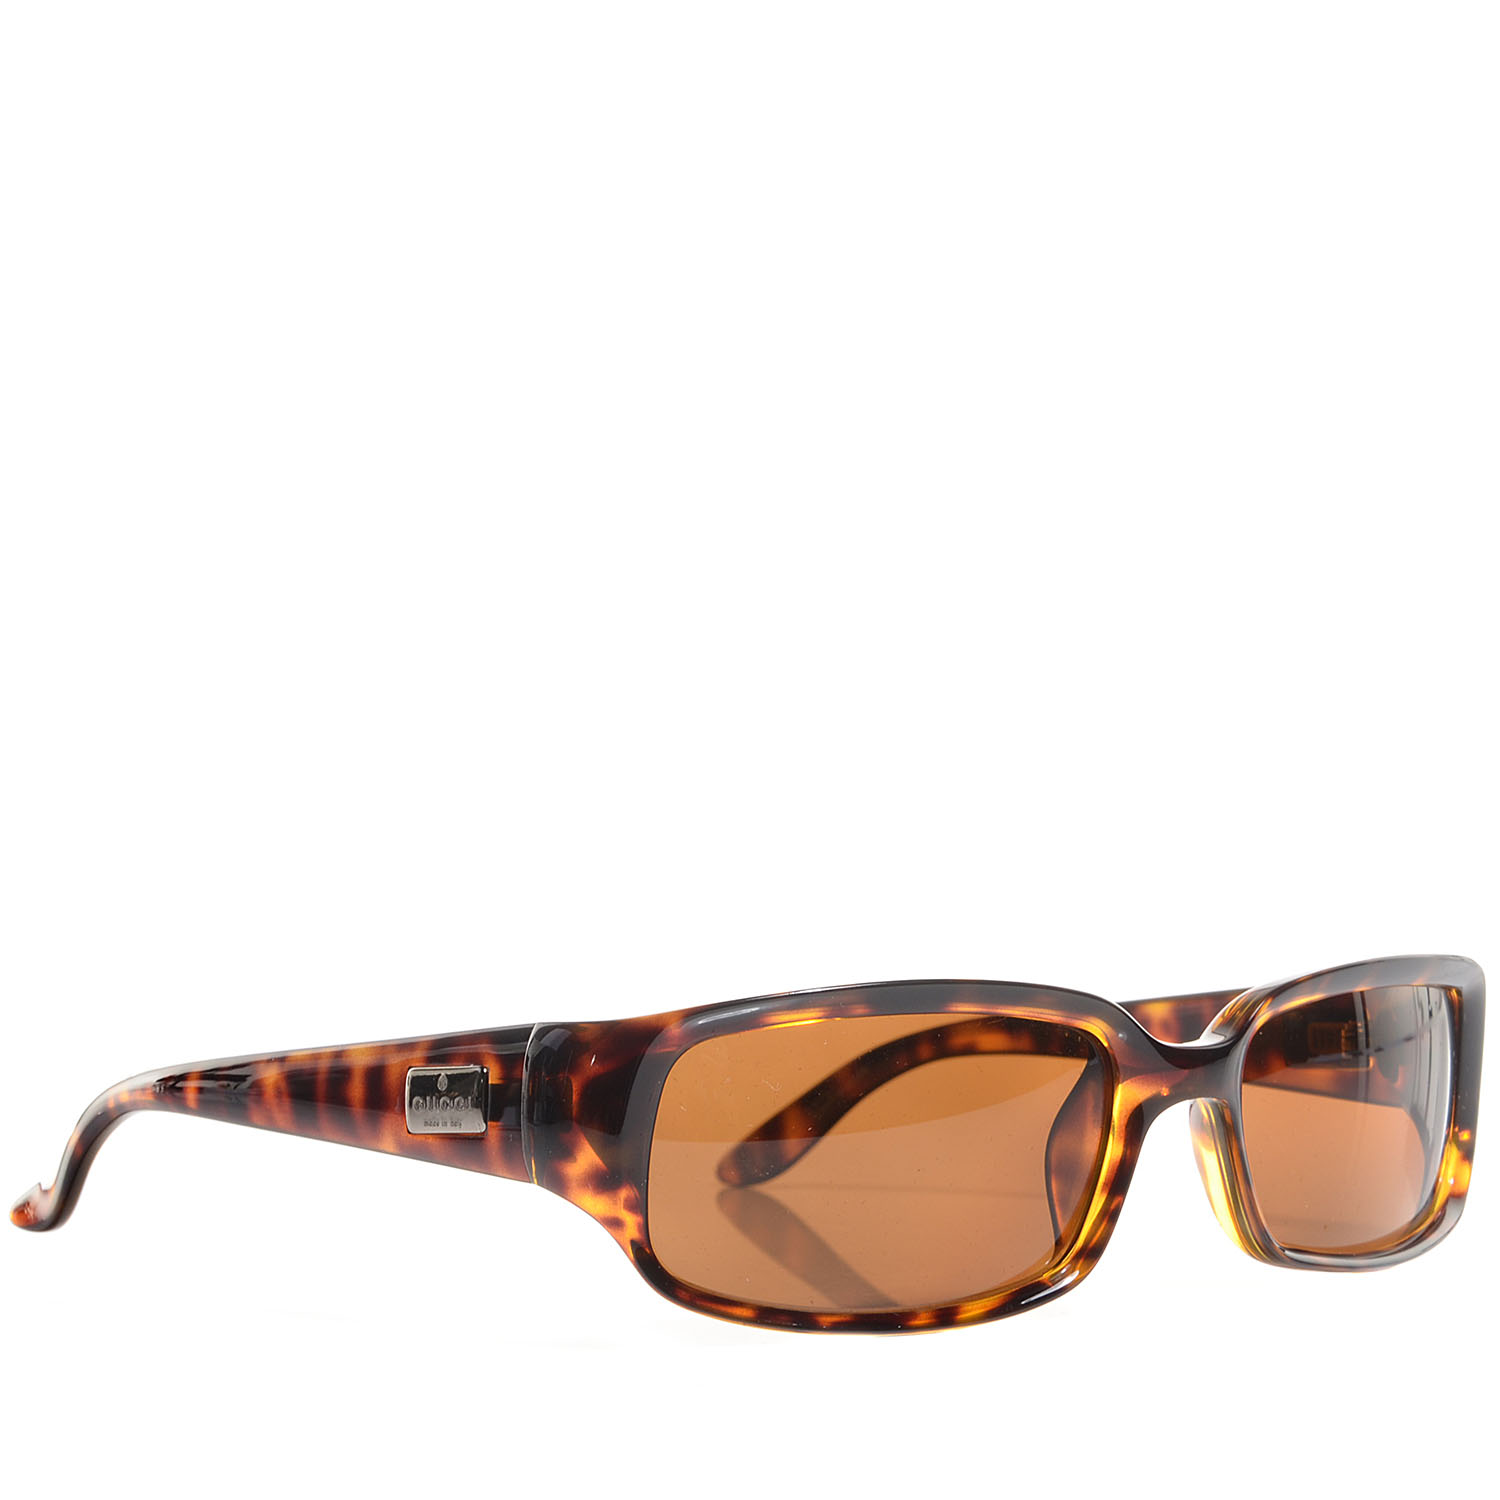 GUCCI Tortoise Shell Sunglasses 2455/S 88164